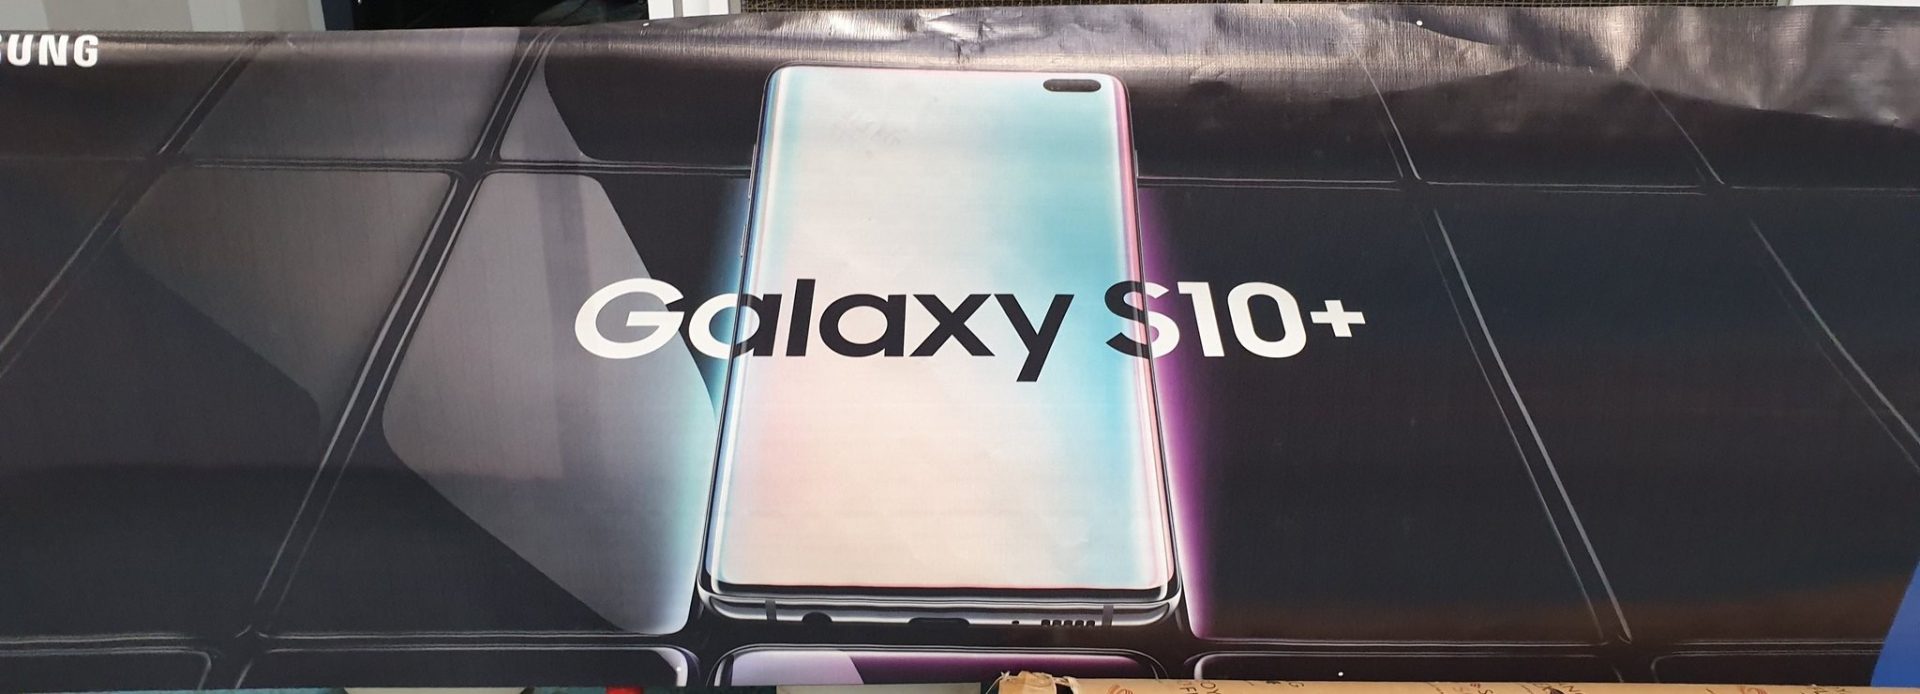 Samsung Galaxy S10+ hero leak